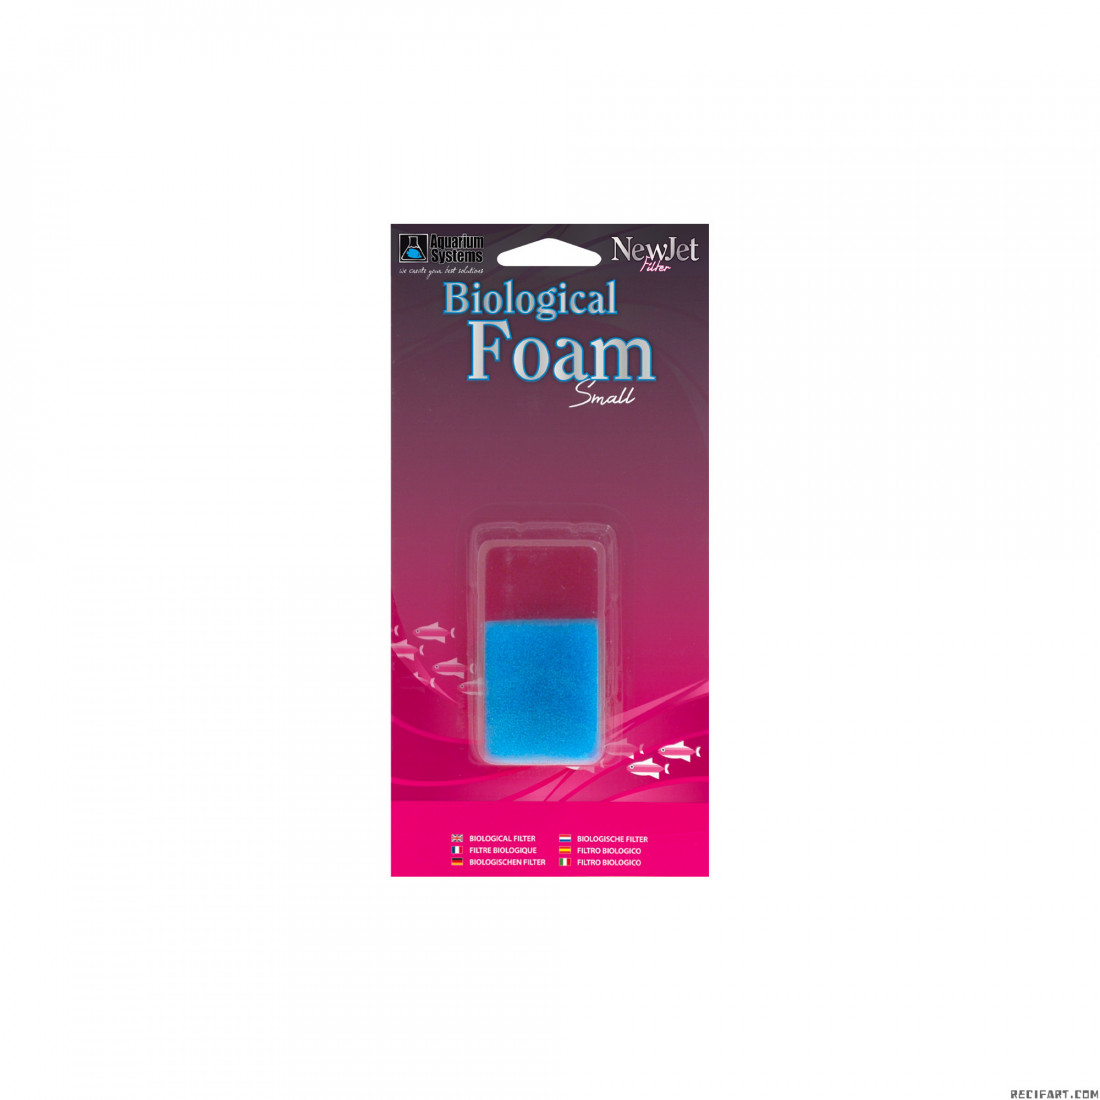 Biological foam for NewJet Filter Small